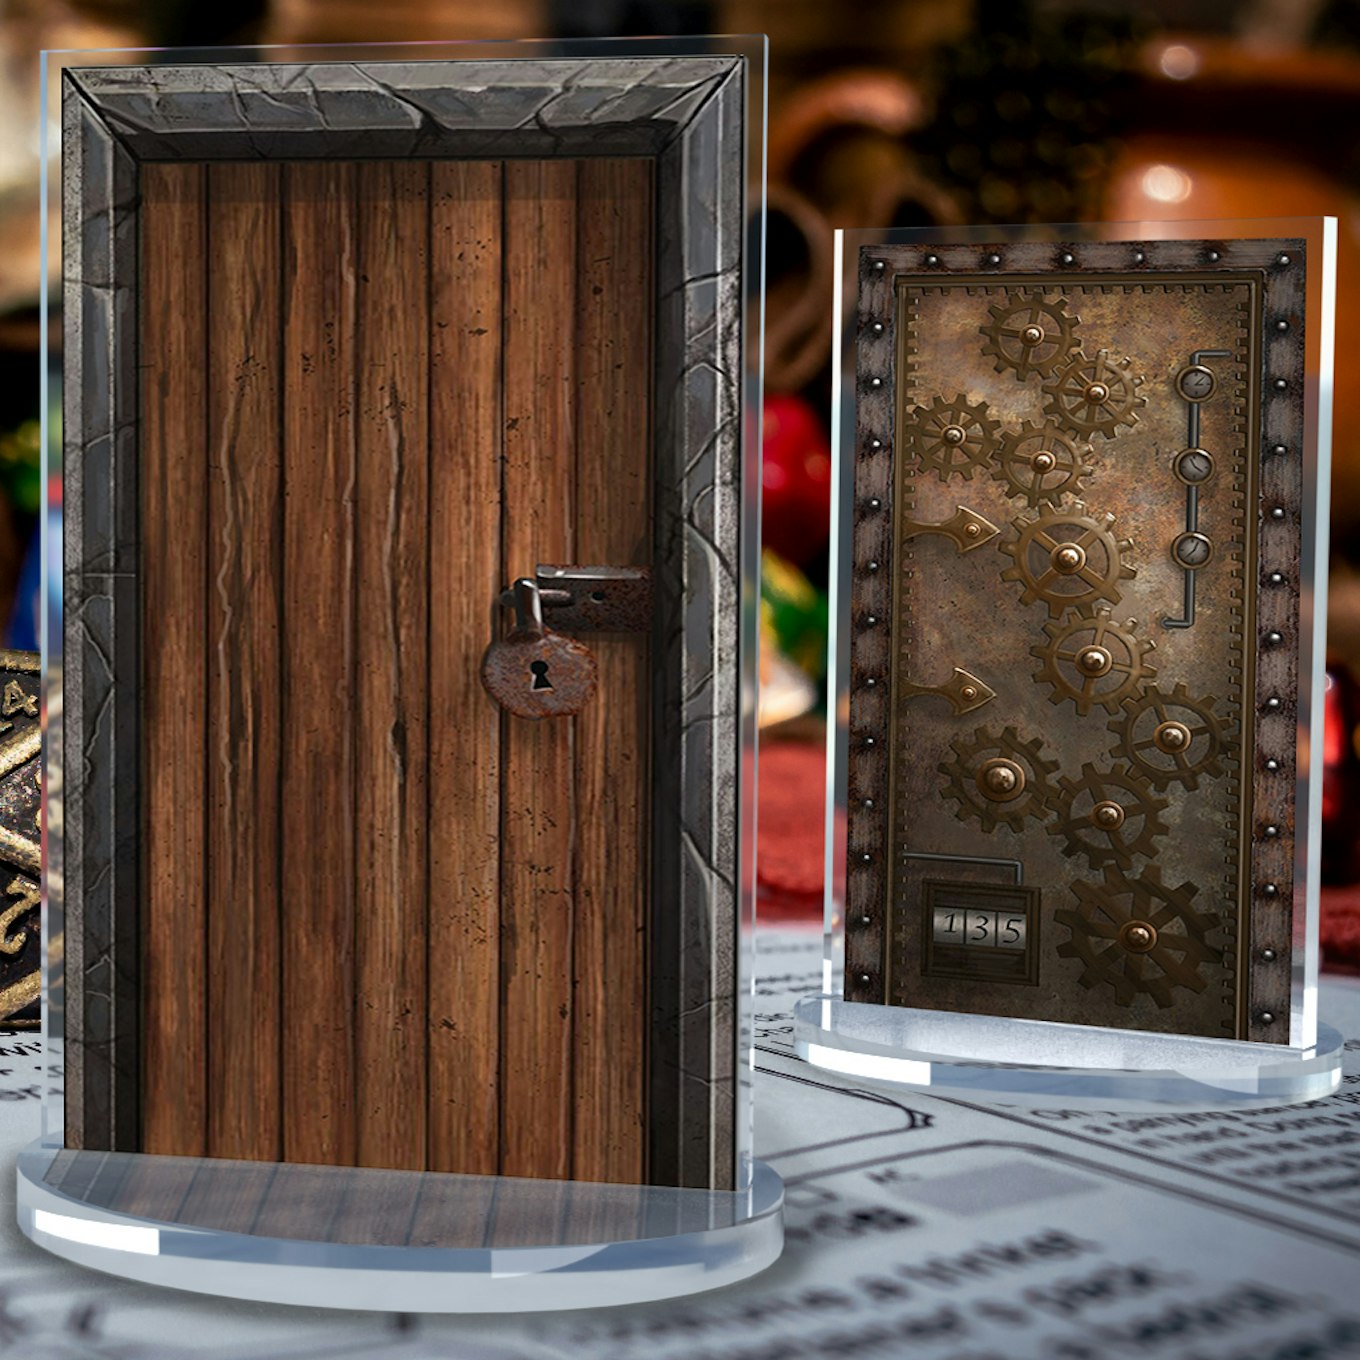 Loke Battlemats 5E: Big Box Of Dungeon Doors - Hard Knox Games